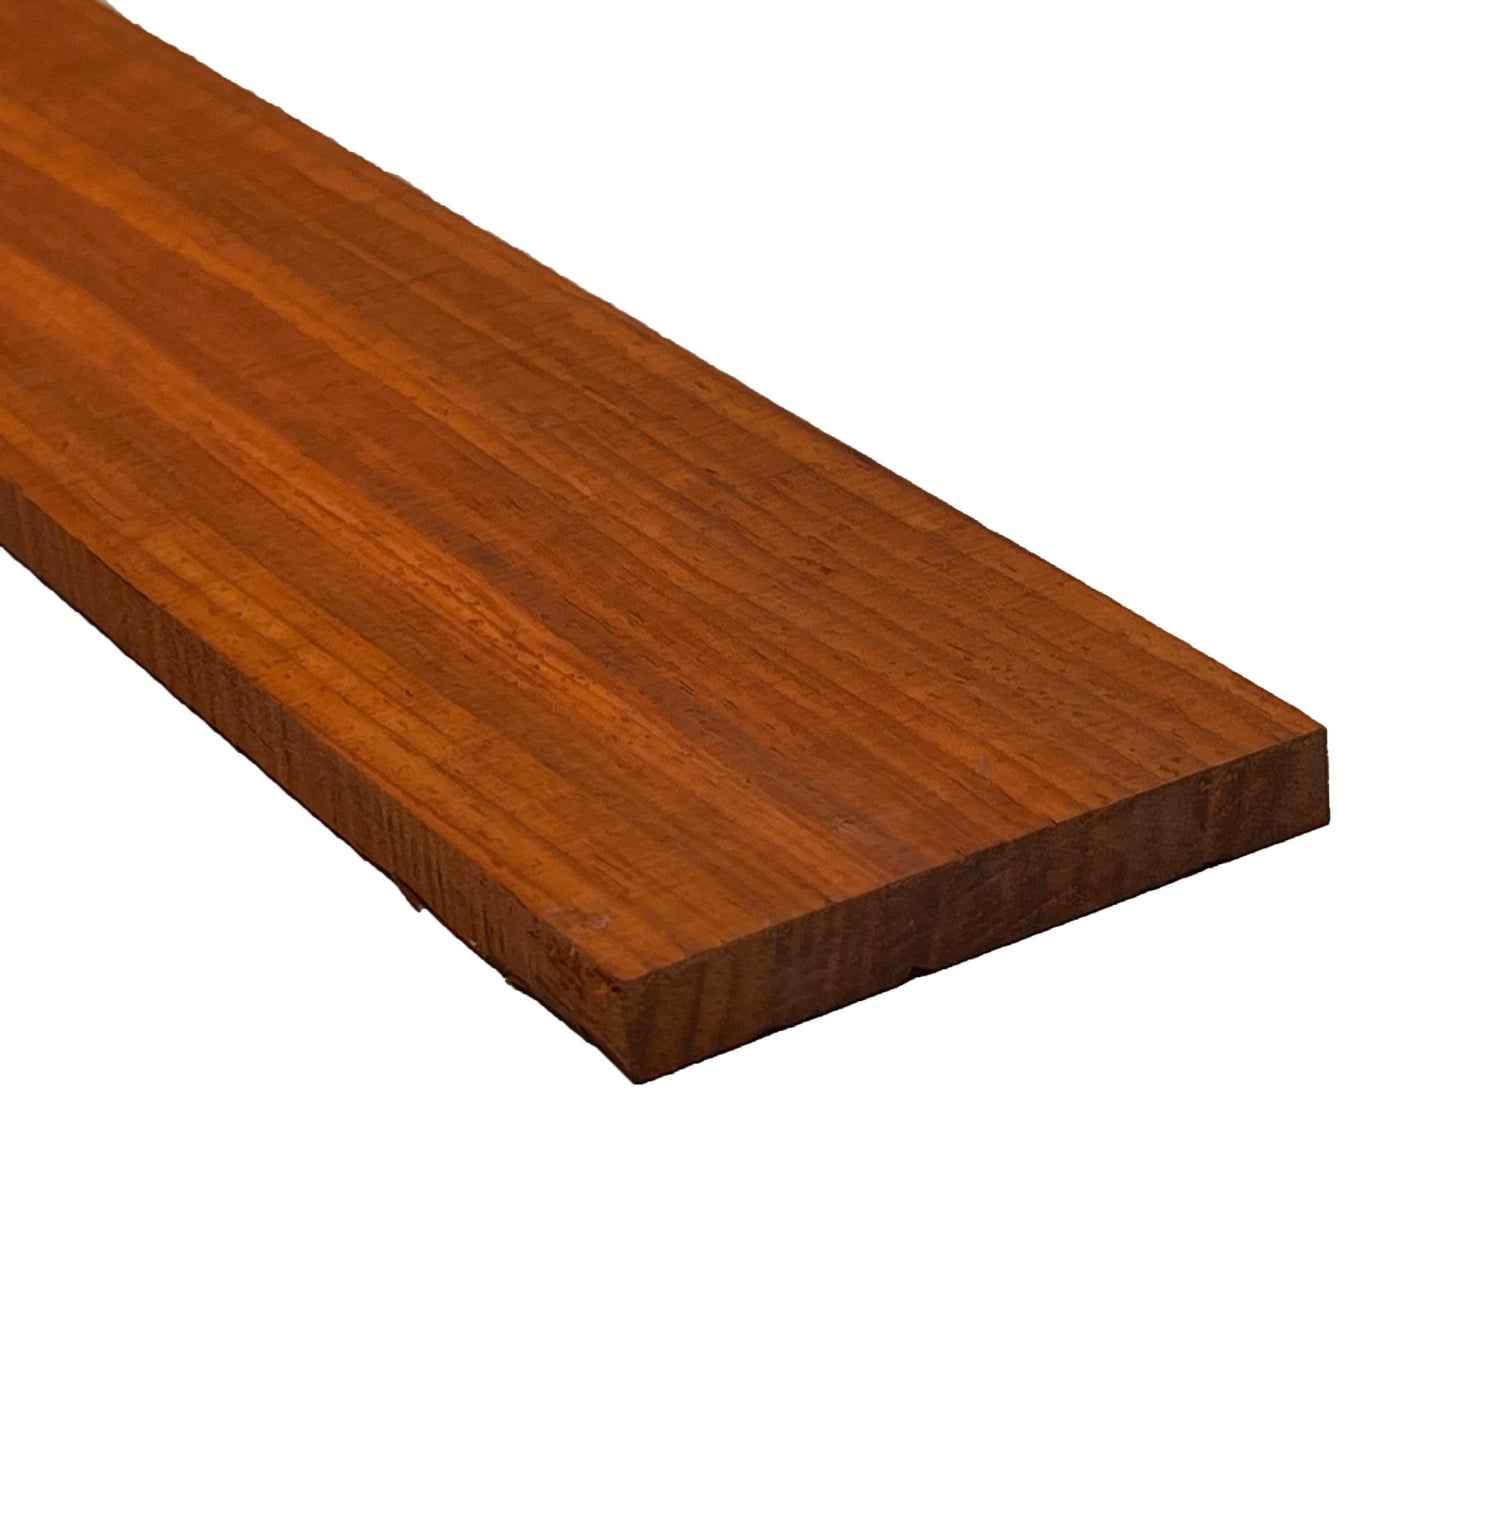 Padauk Thin Stock Lumber Boards Wood Crafts - Exotic Wood Zone - Buy online Across USA 